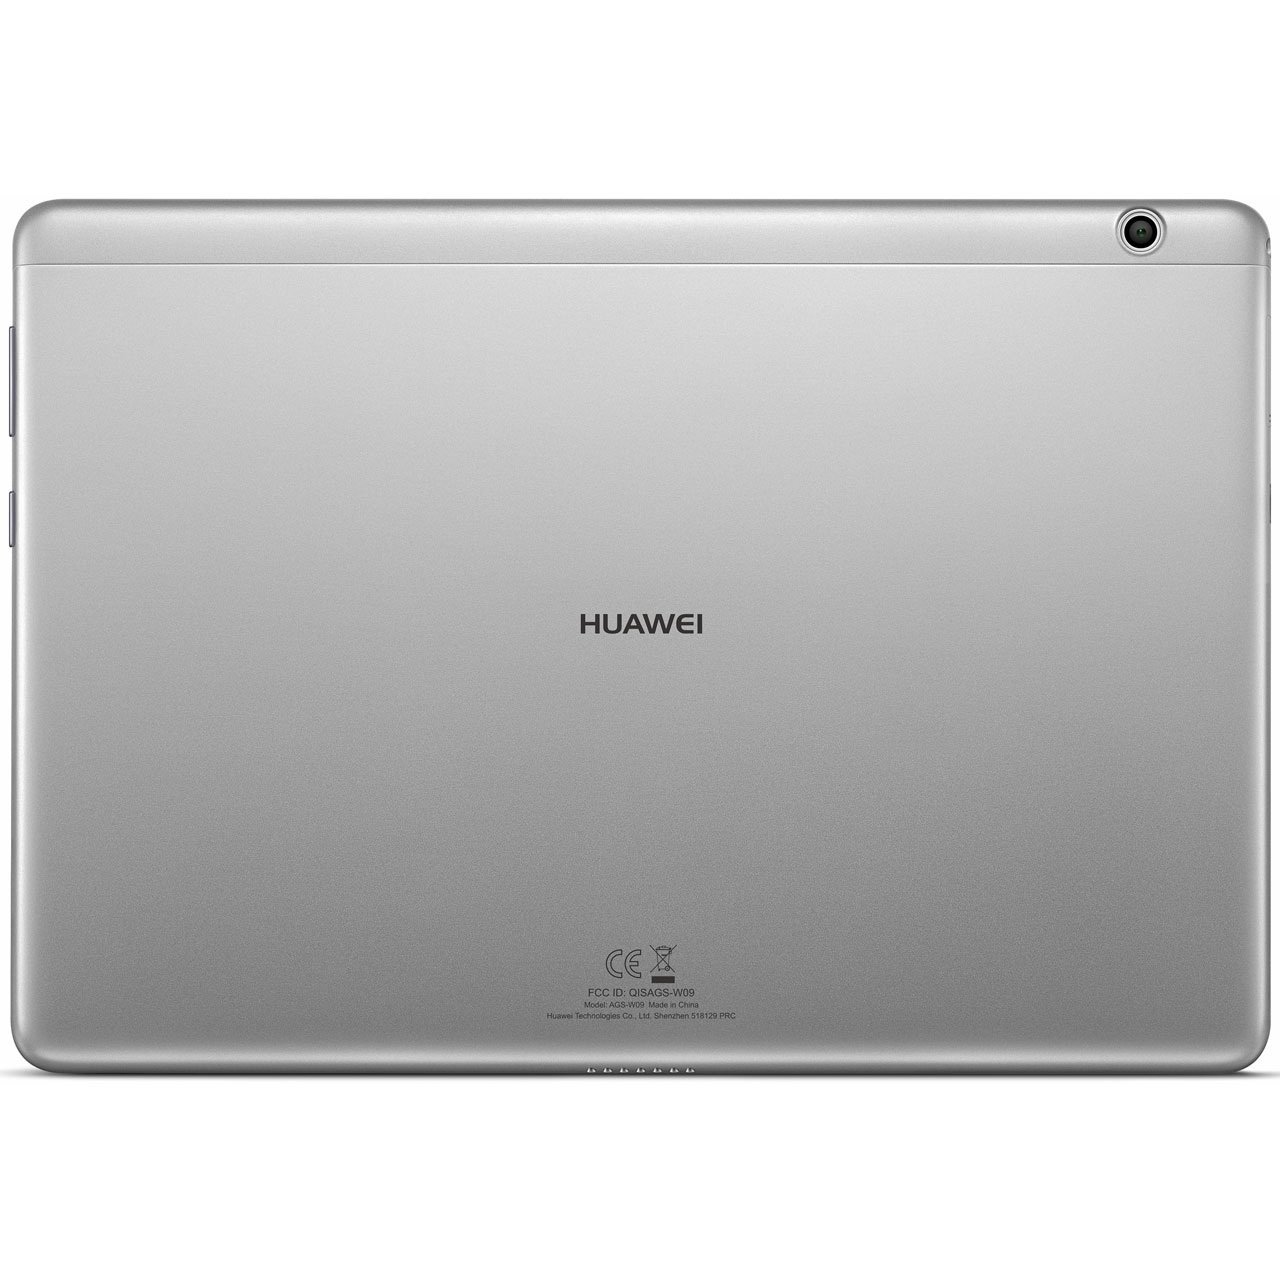 Huawei MediaPad T3 9.6 Inch 32GB Wi-Fi Tablet Review